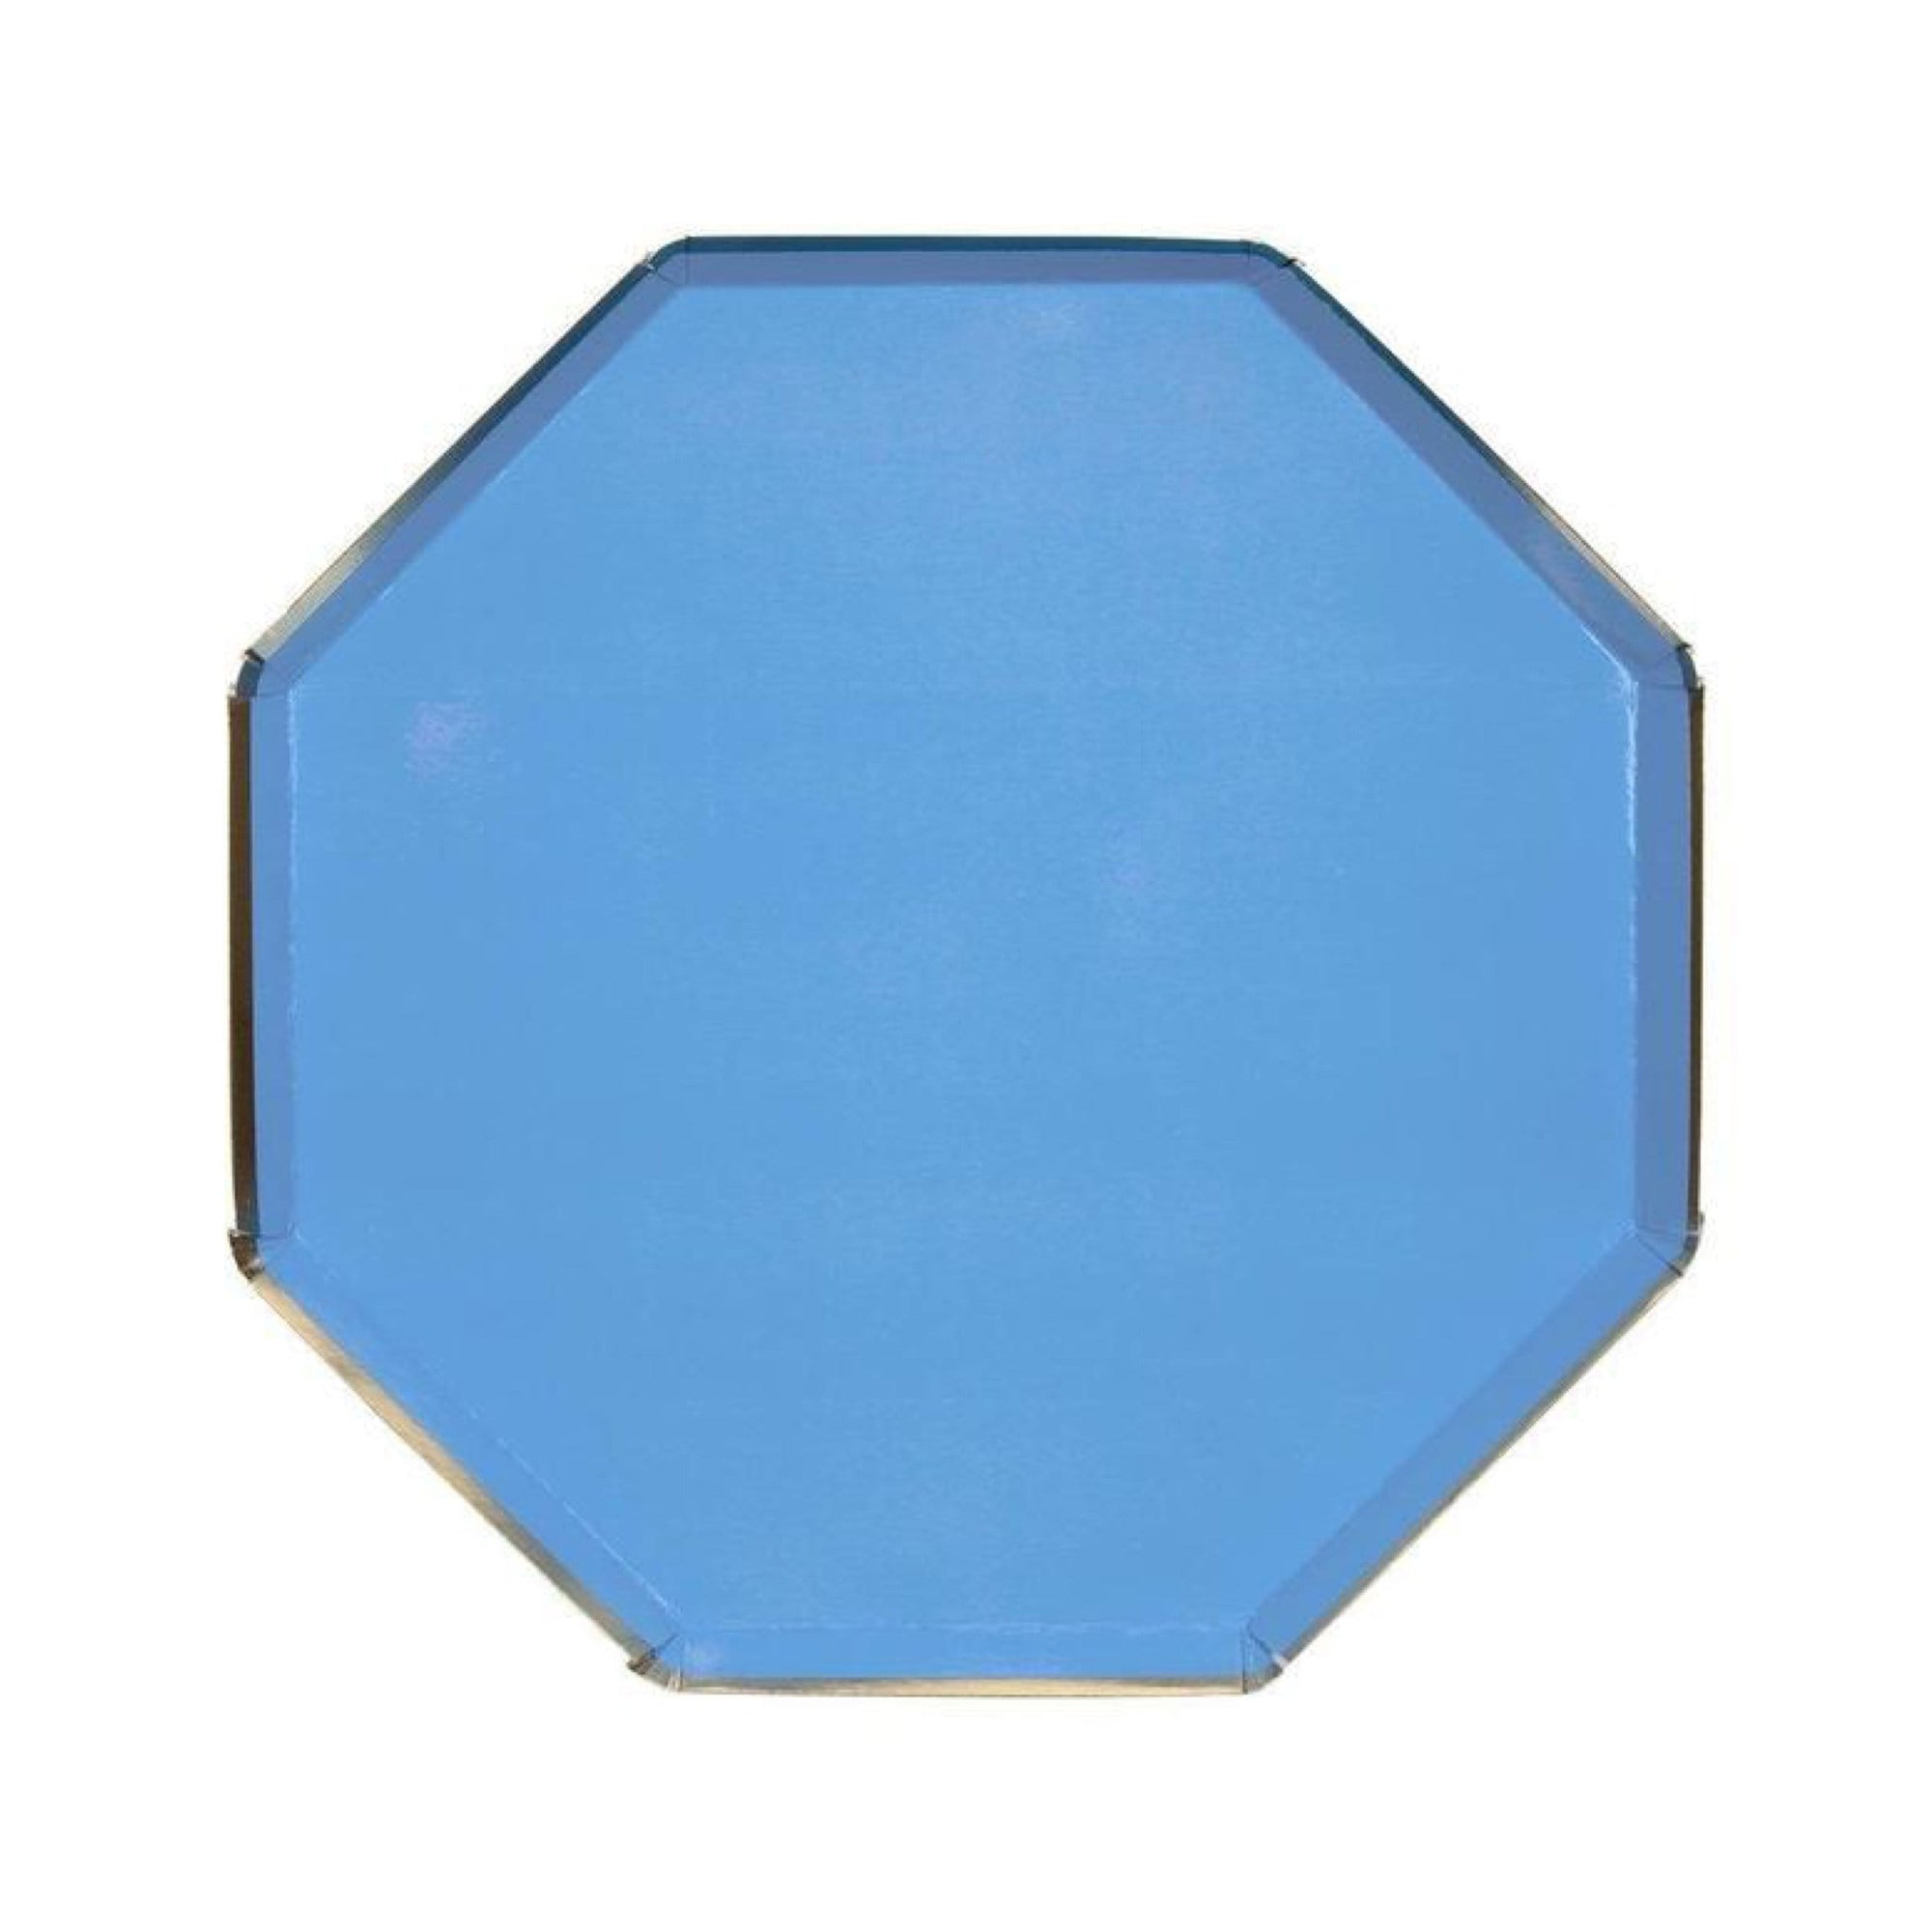 Blue Octagon Geometric Plates